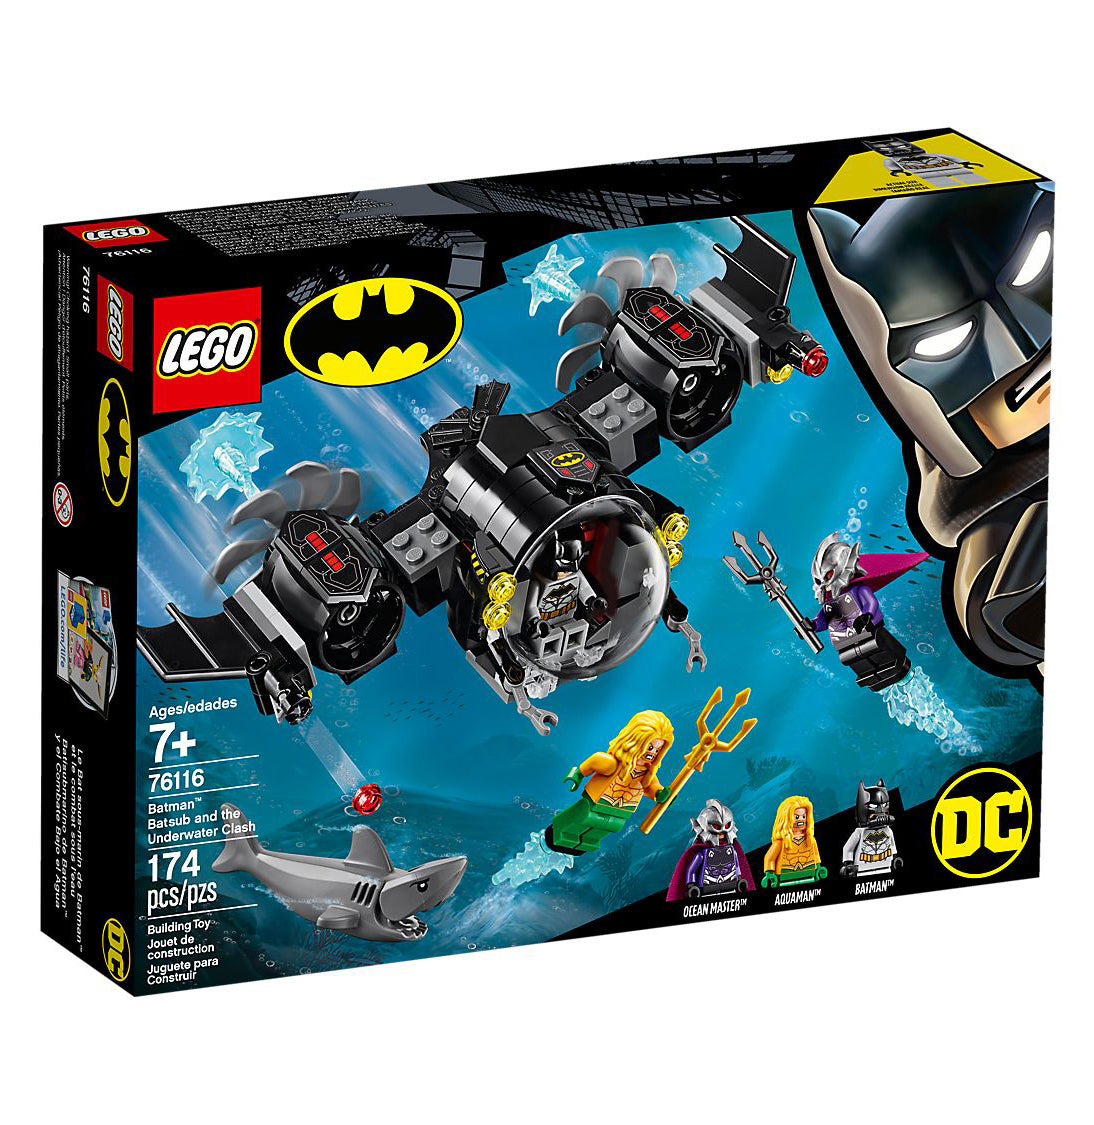 Lego DC Super Heroes Batman Batsub & the Underwater Clash 76116